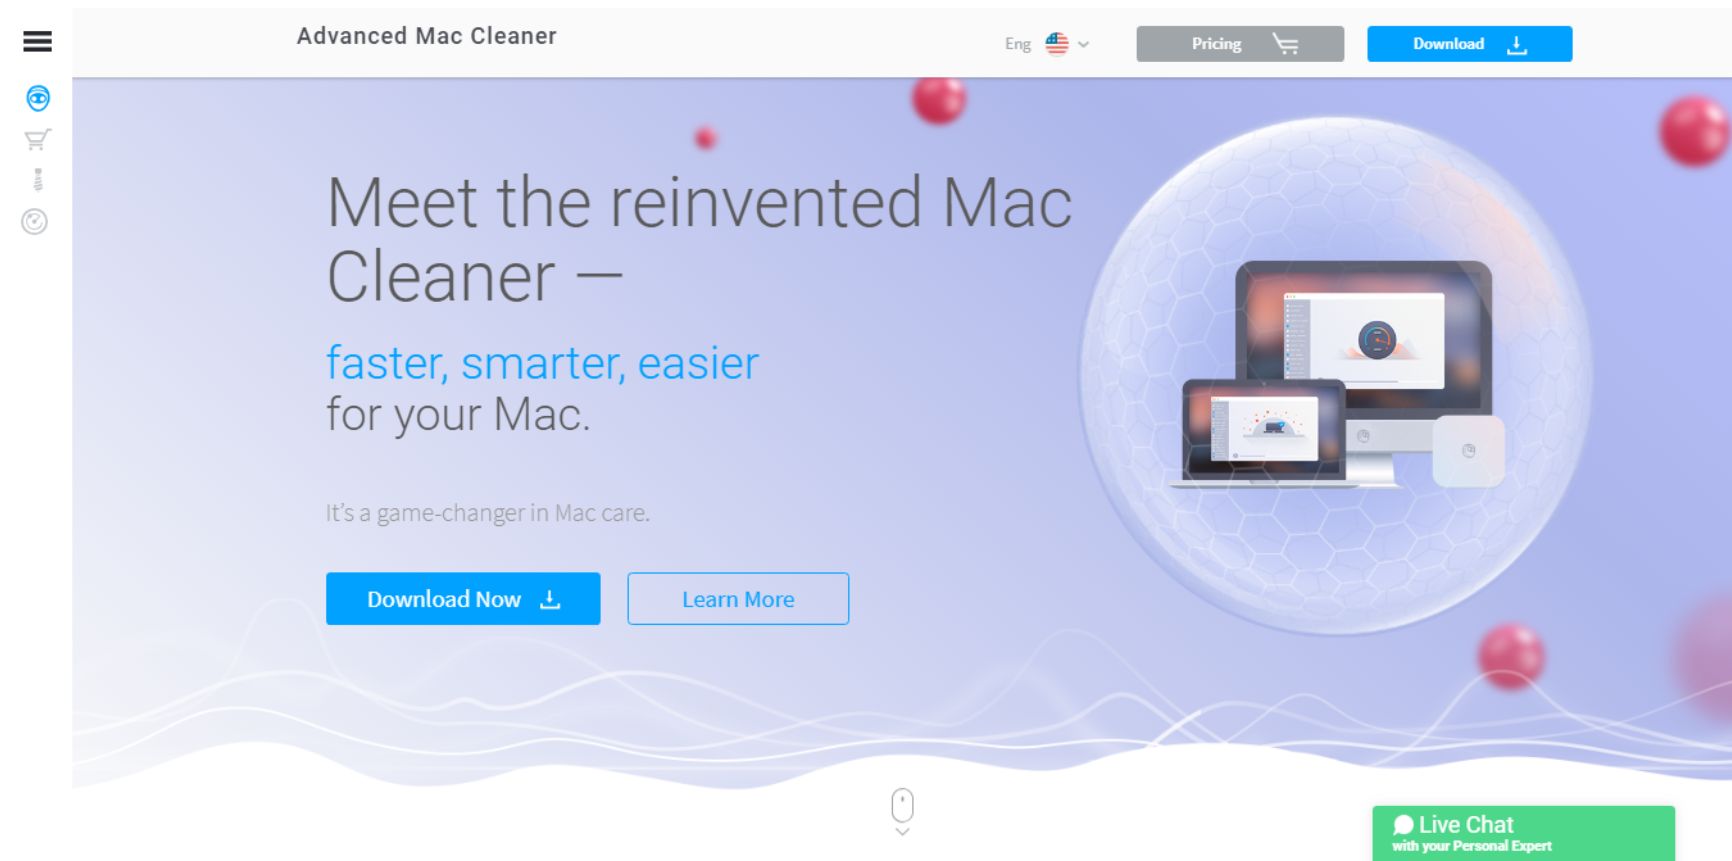 is the advanced mac cleaner a virus